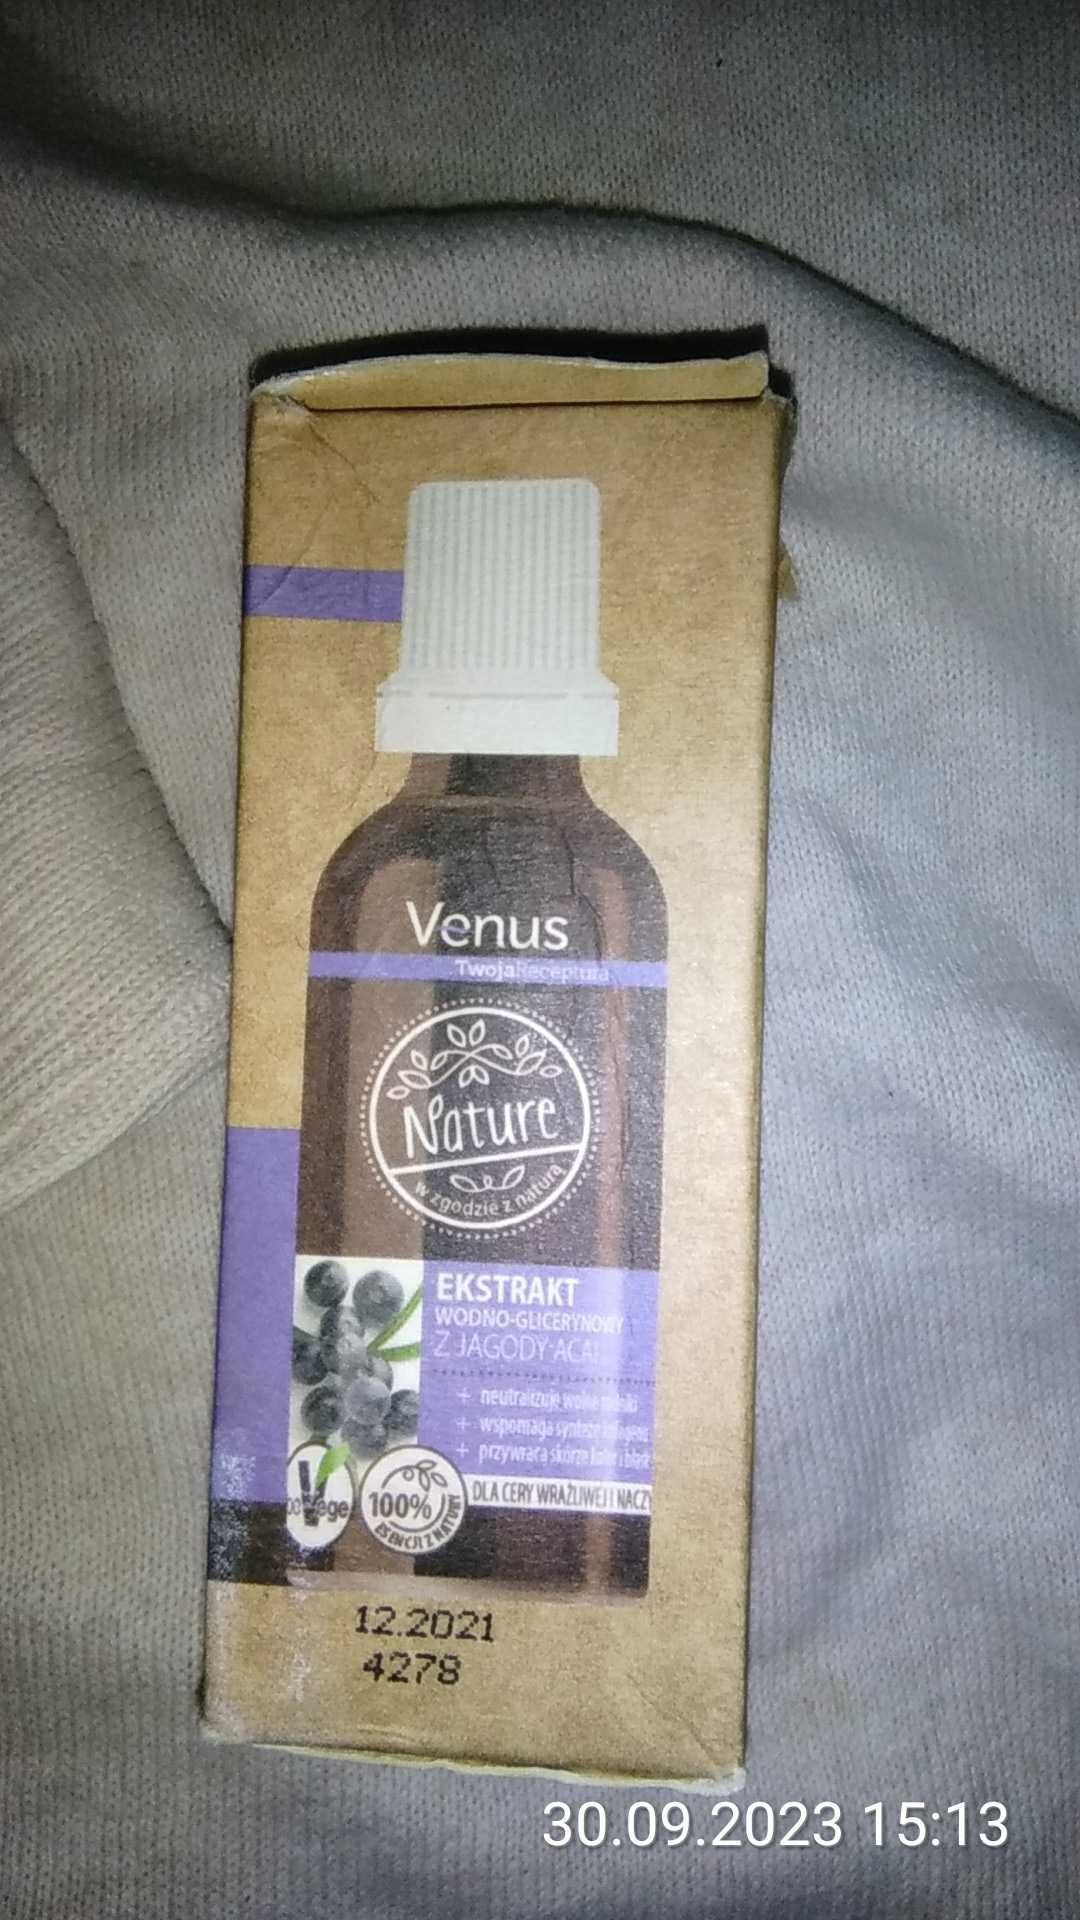 Venus ekstrakt wodno-glicerynowy jagody acai